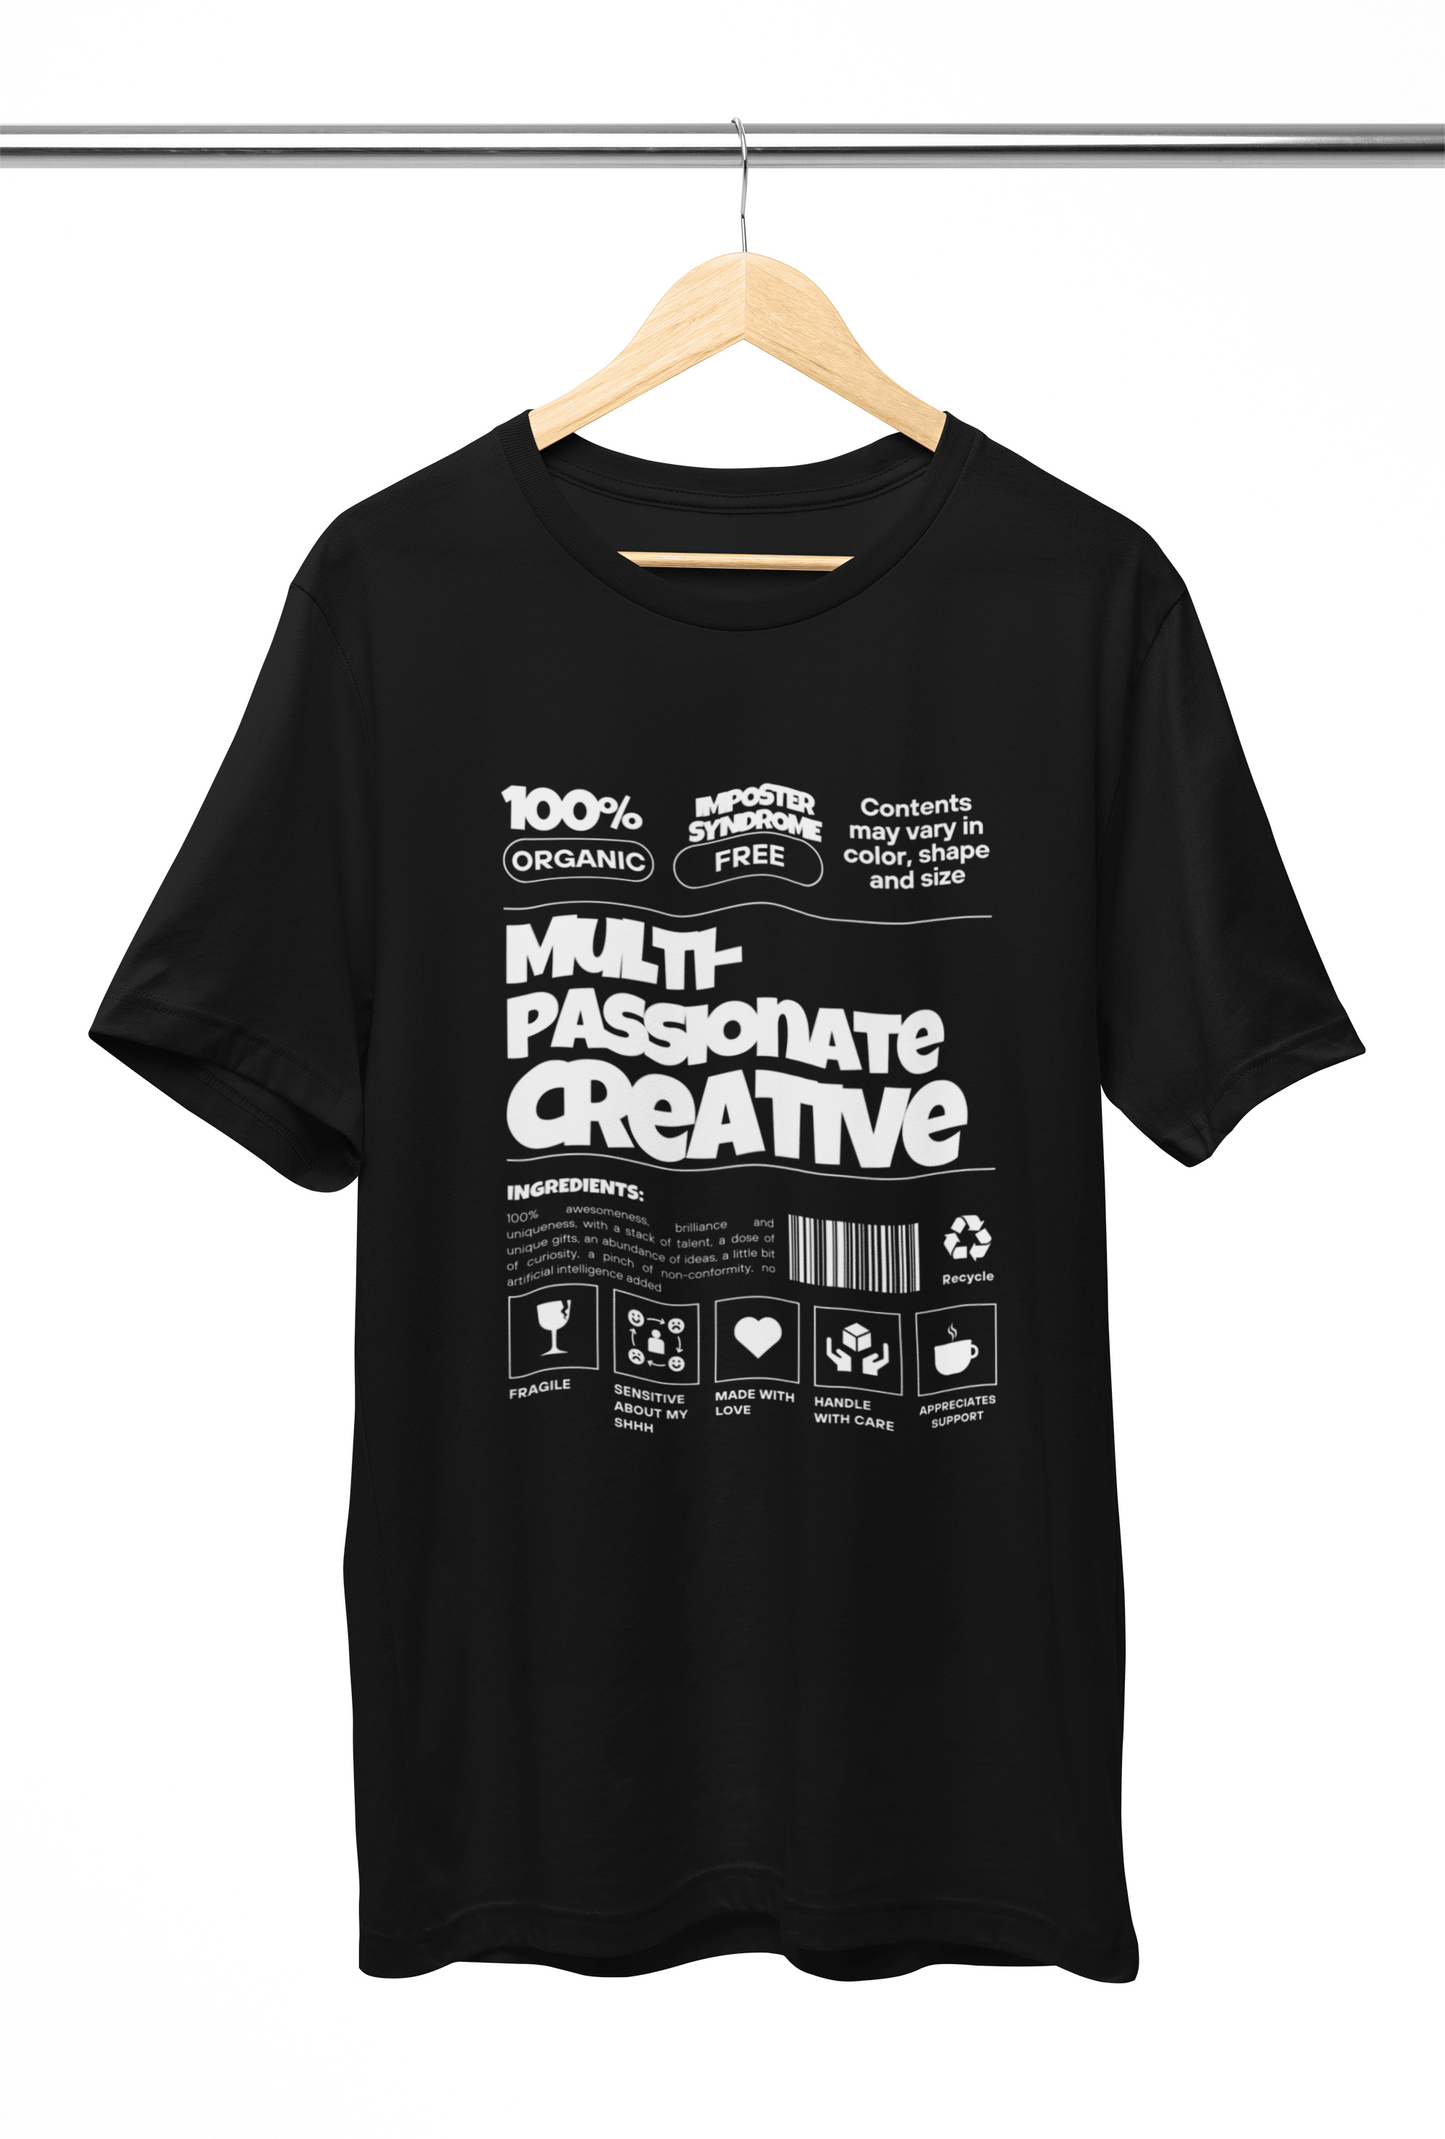 Multi-Passionate Creative Shirt